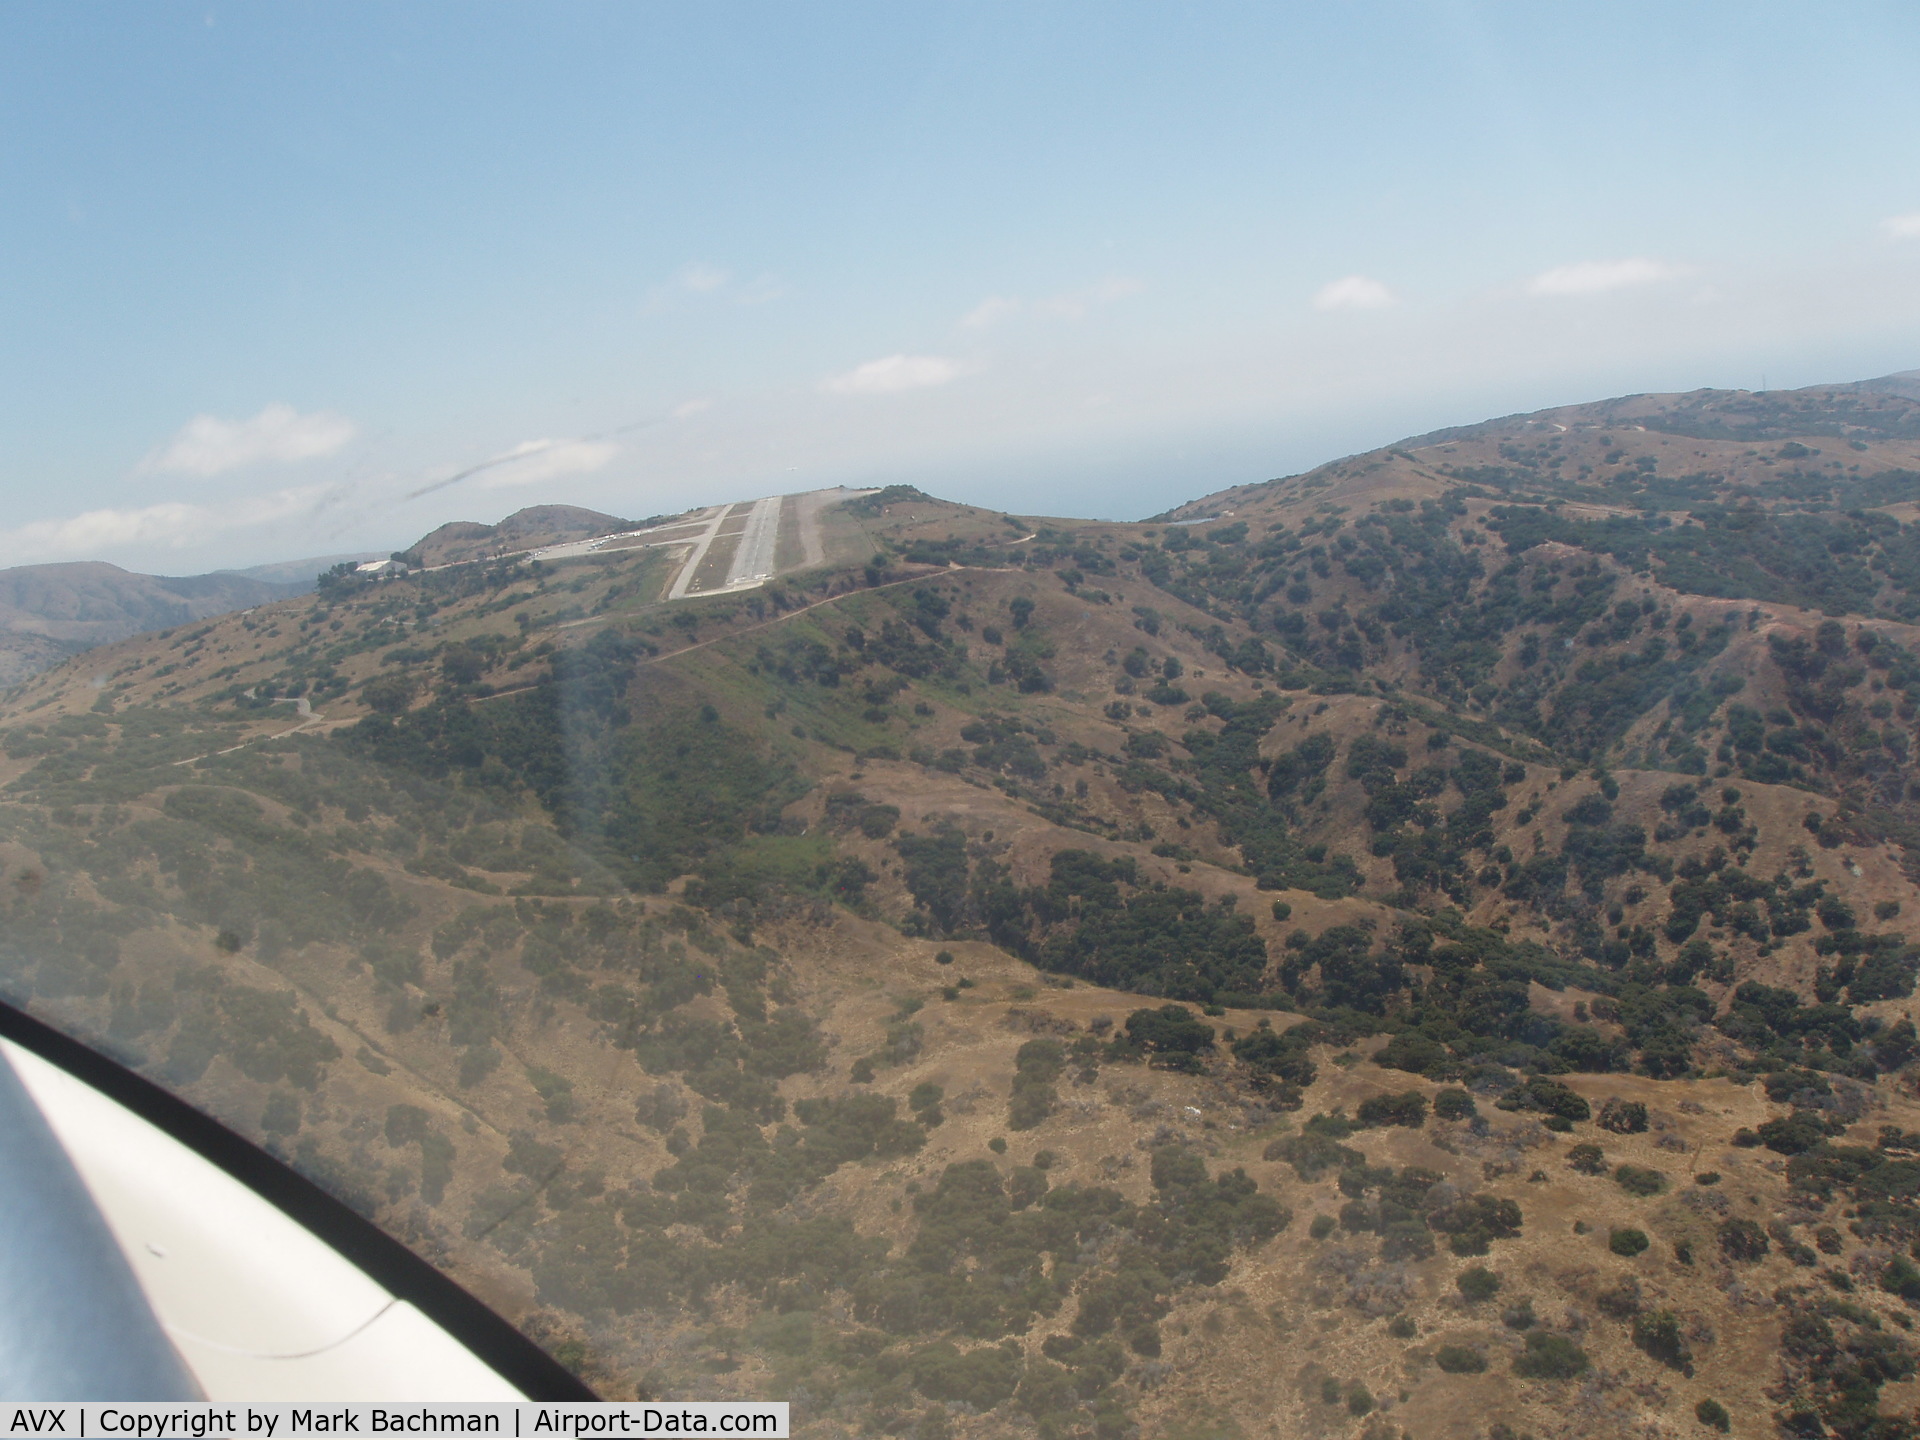 Catalina Airport (AVX) - Final Approach at Catalina Island